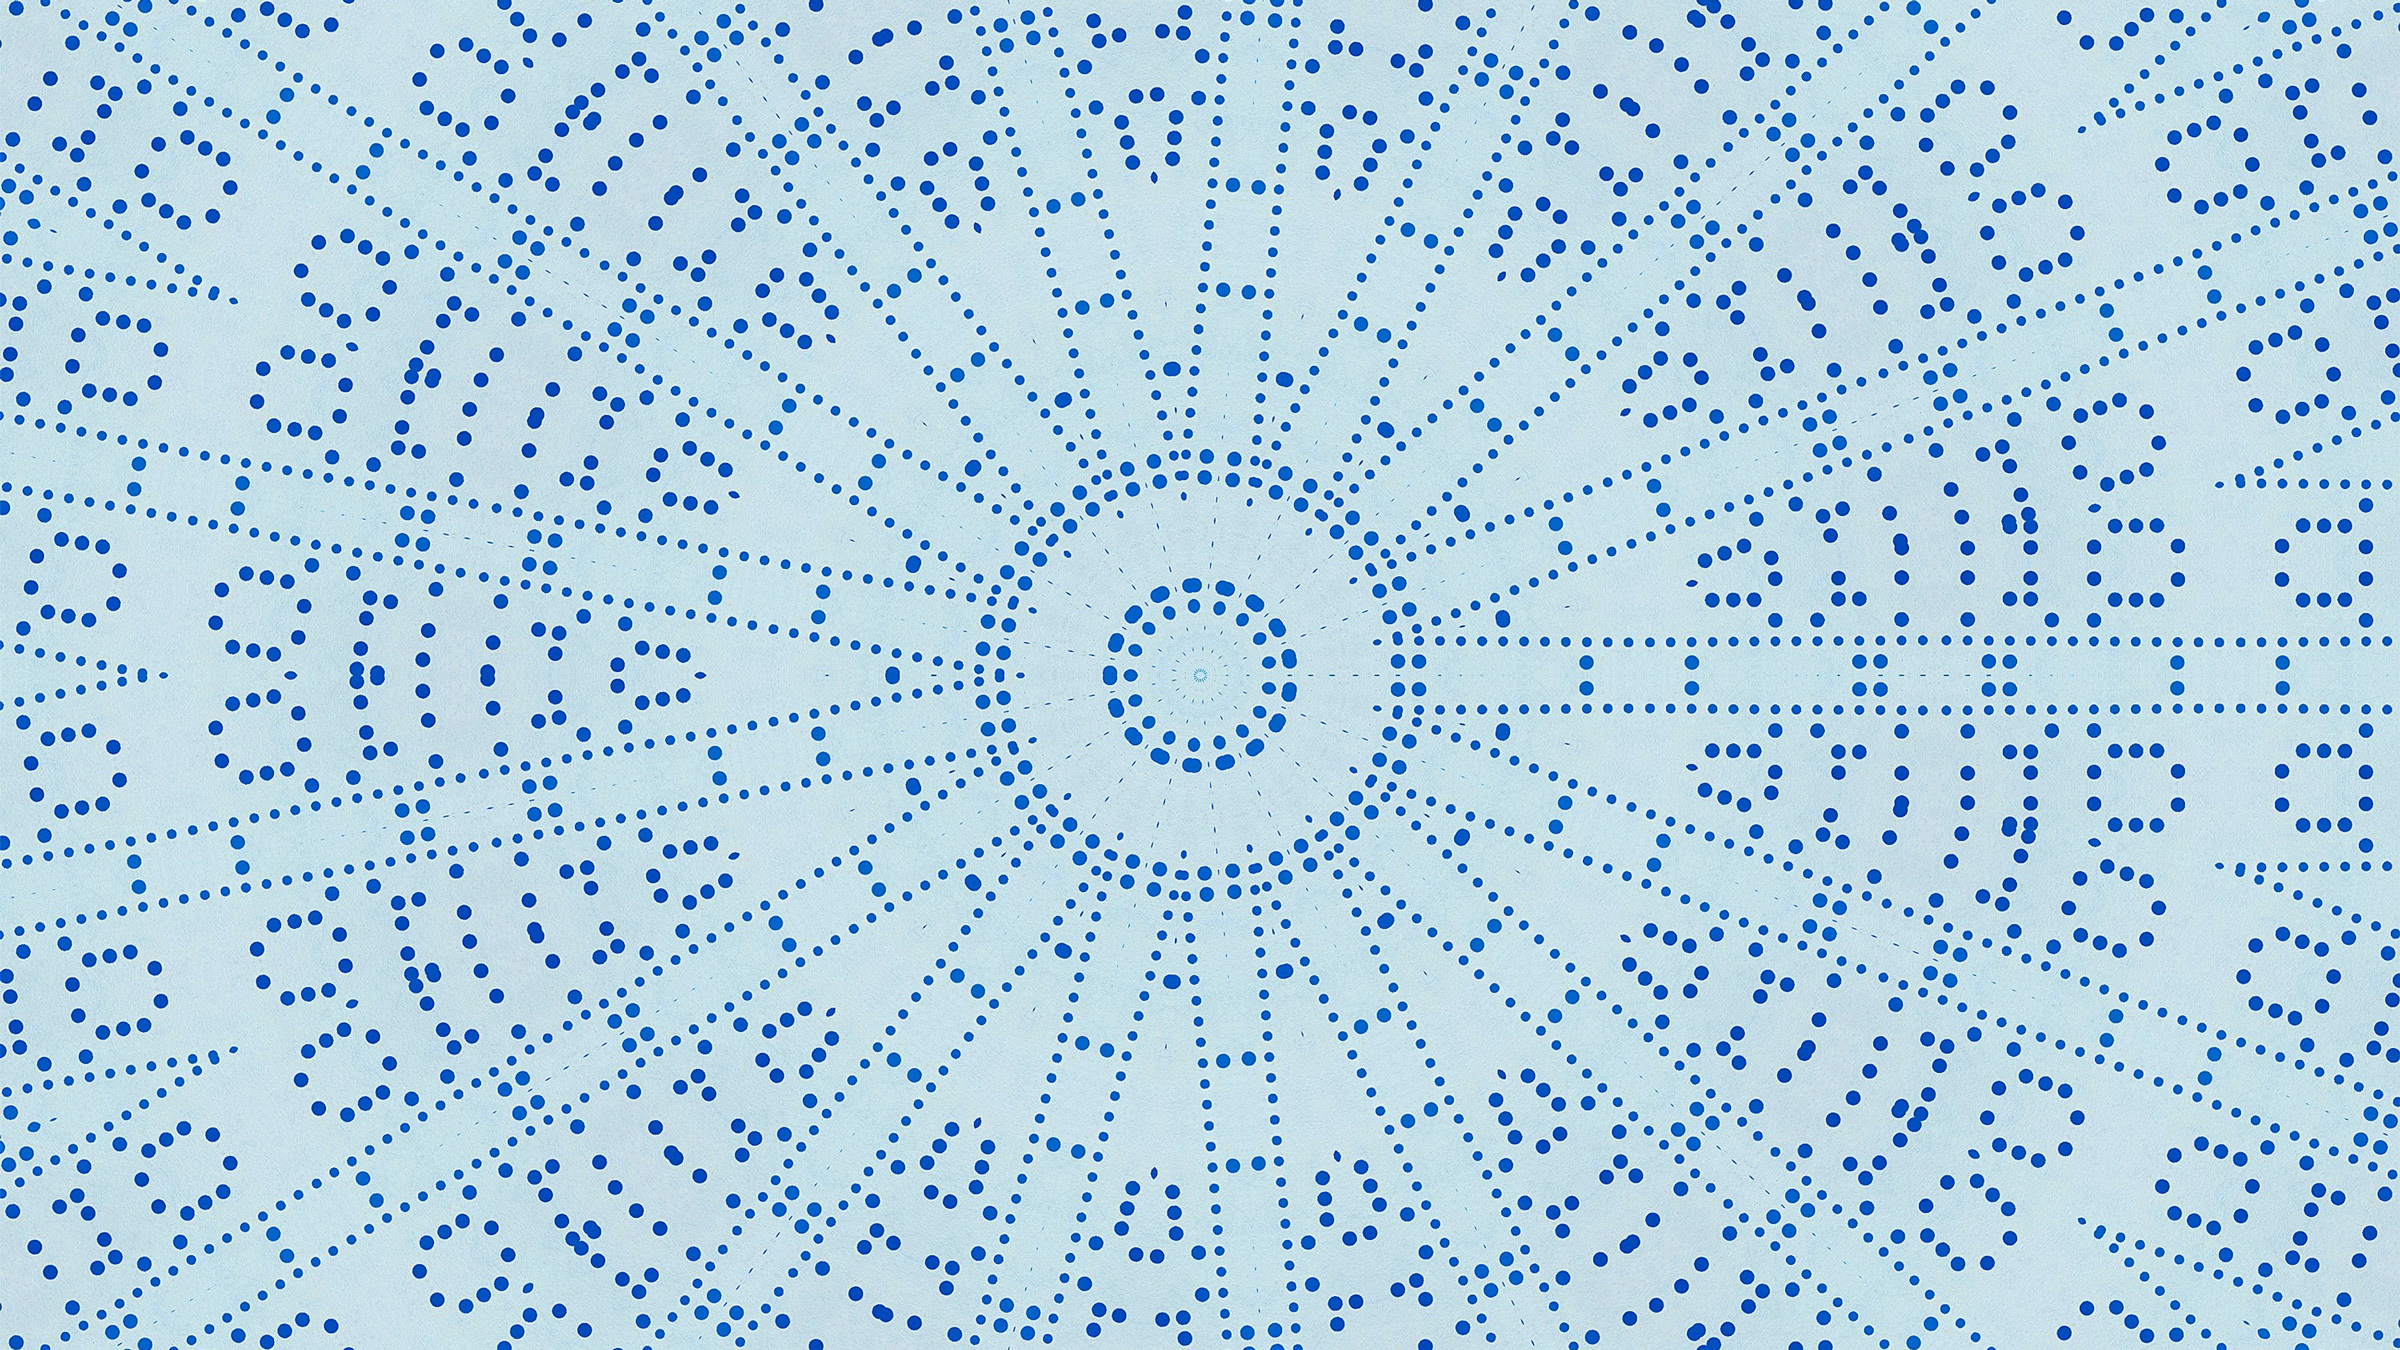 dots form a geometric pattern design, illustration